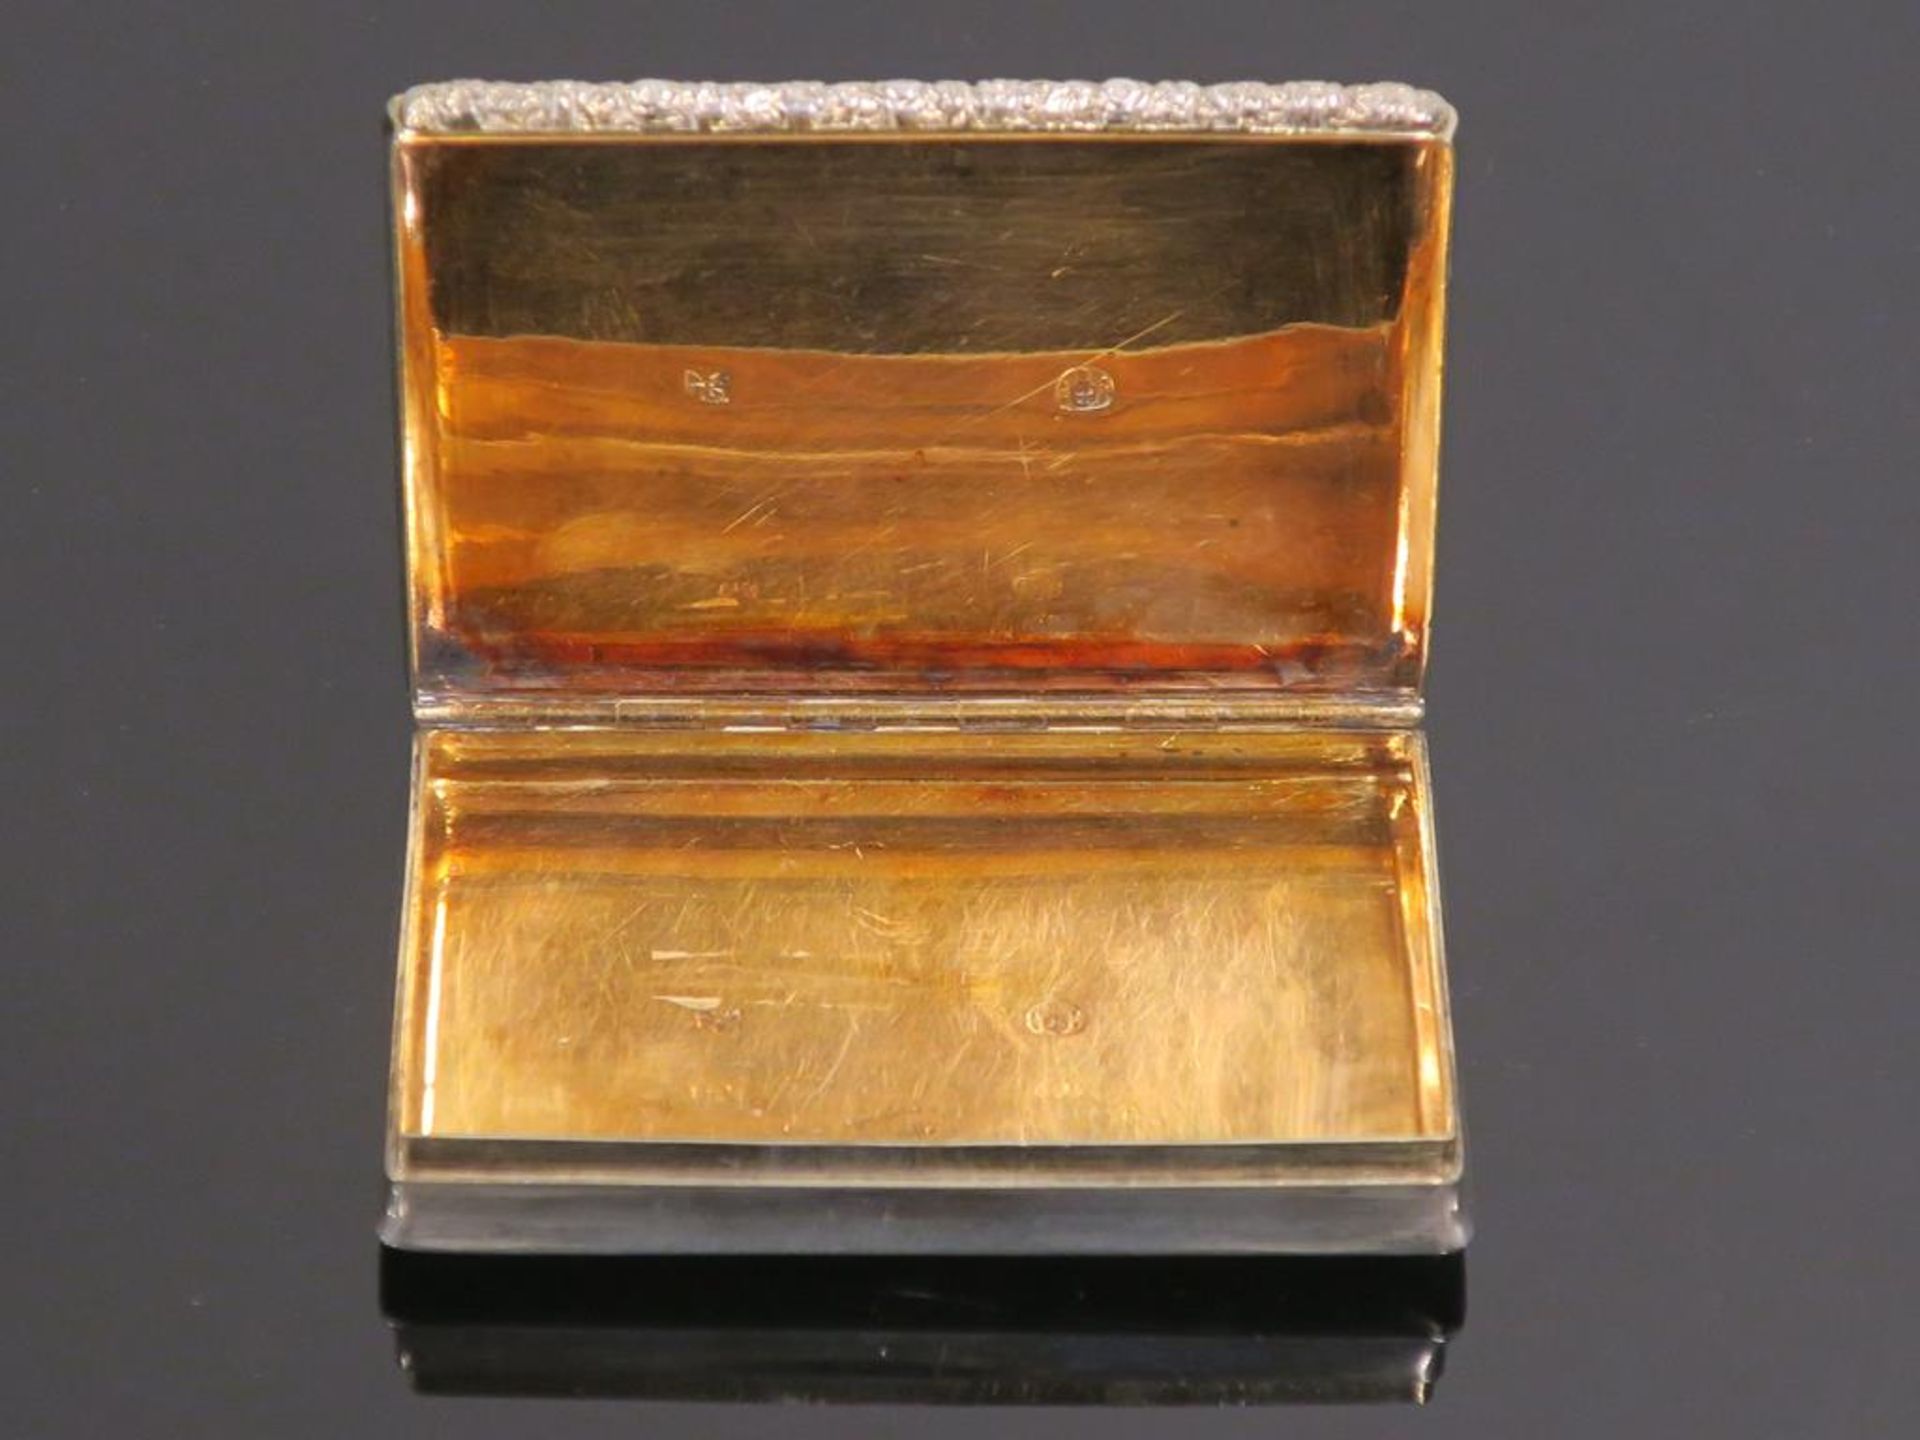 An Austro Hungarian Silver Snuff Box (Prague Assay Marks) (est £150-£300) - Image 2 of 3